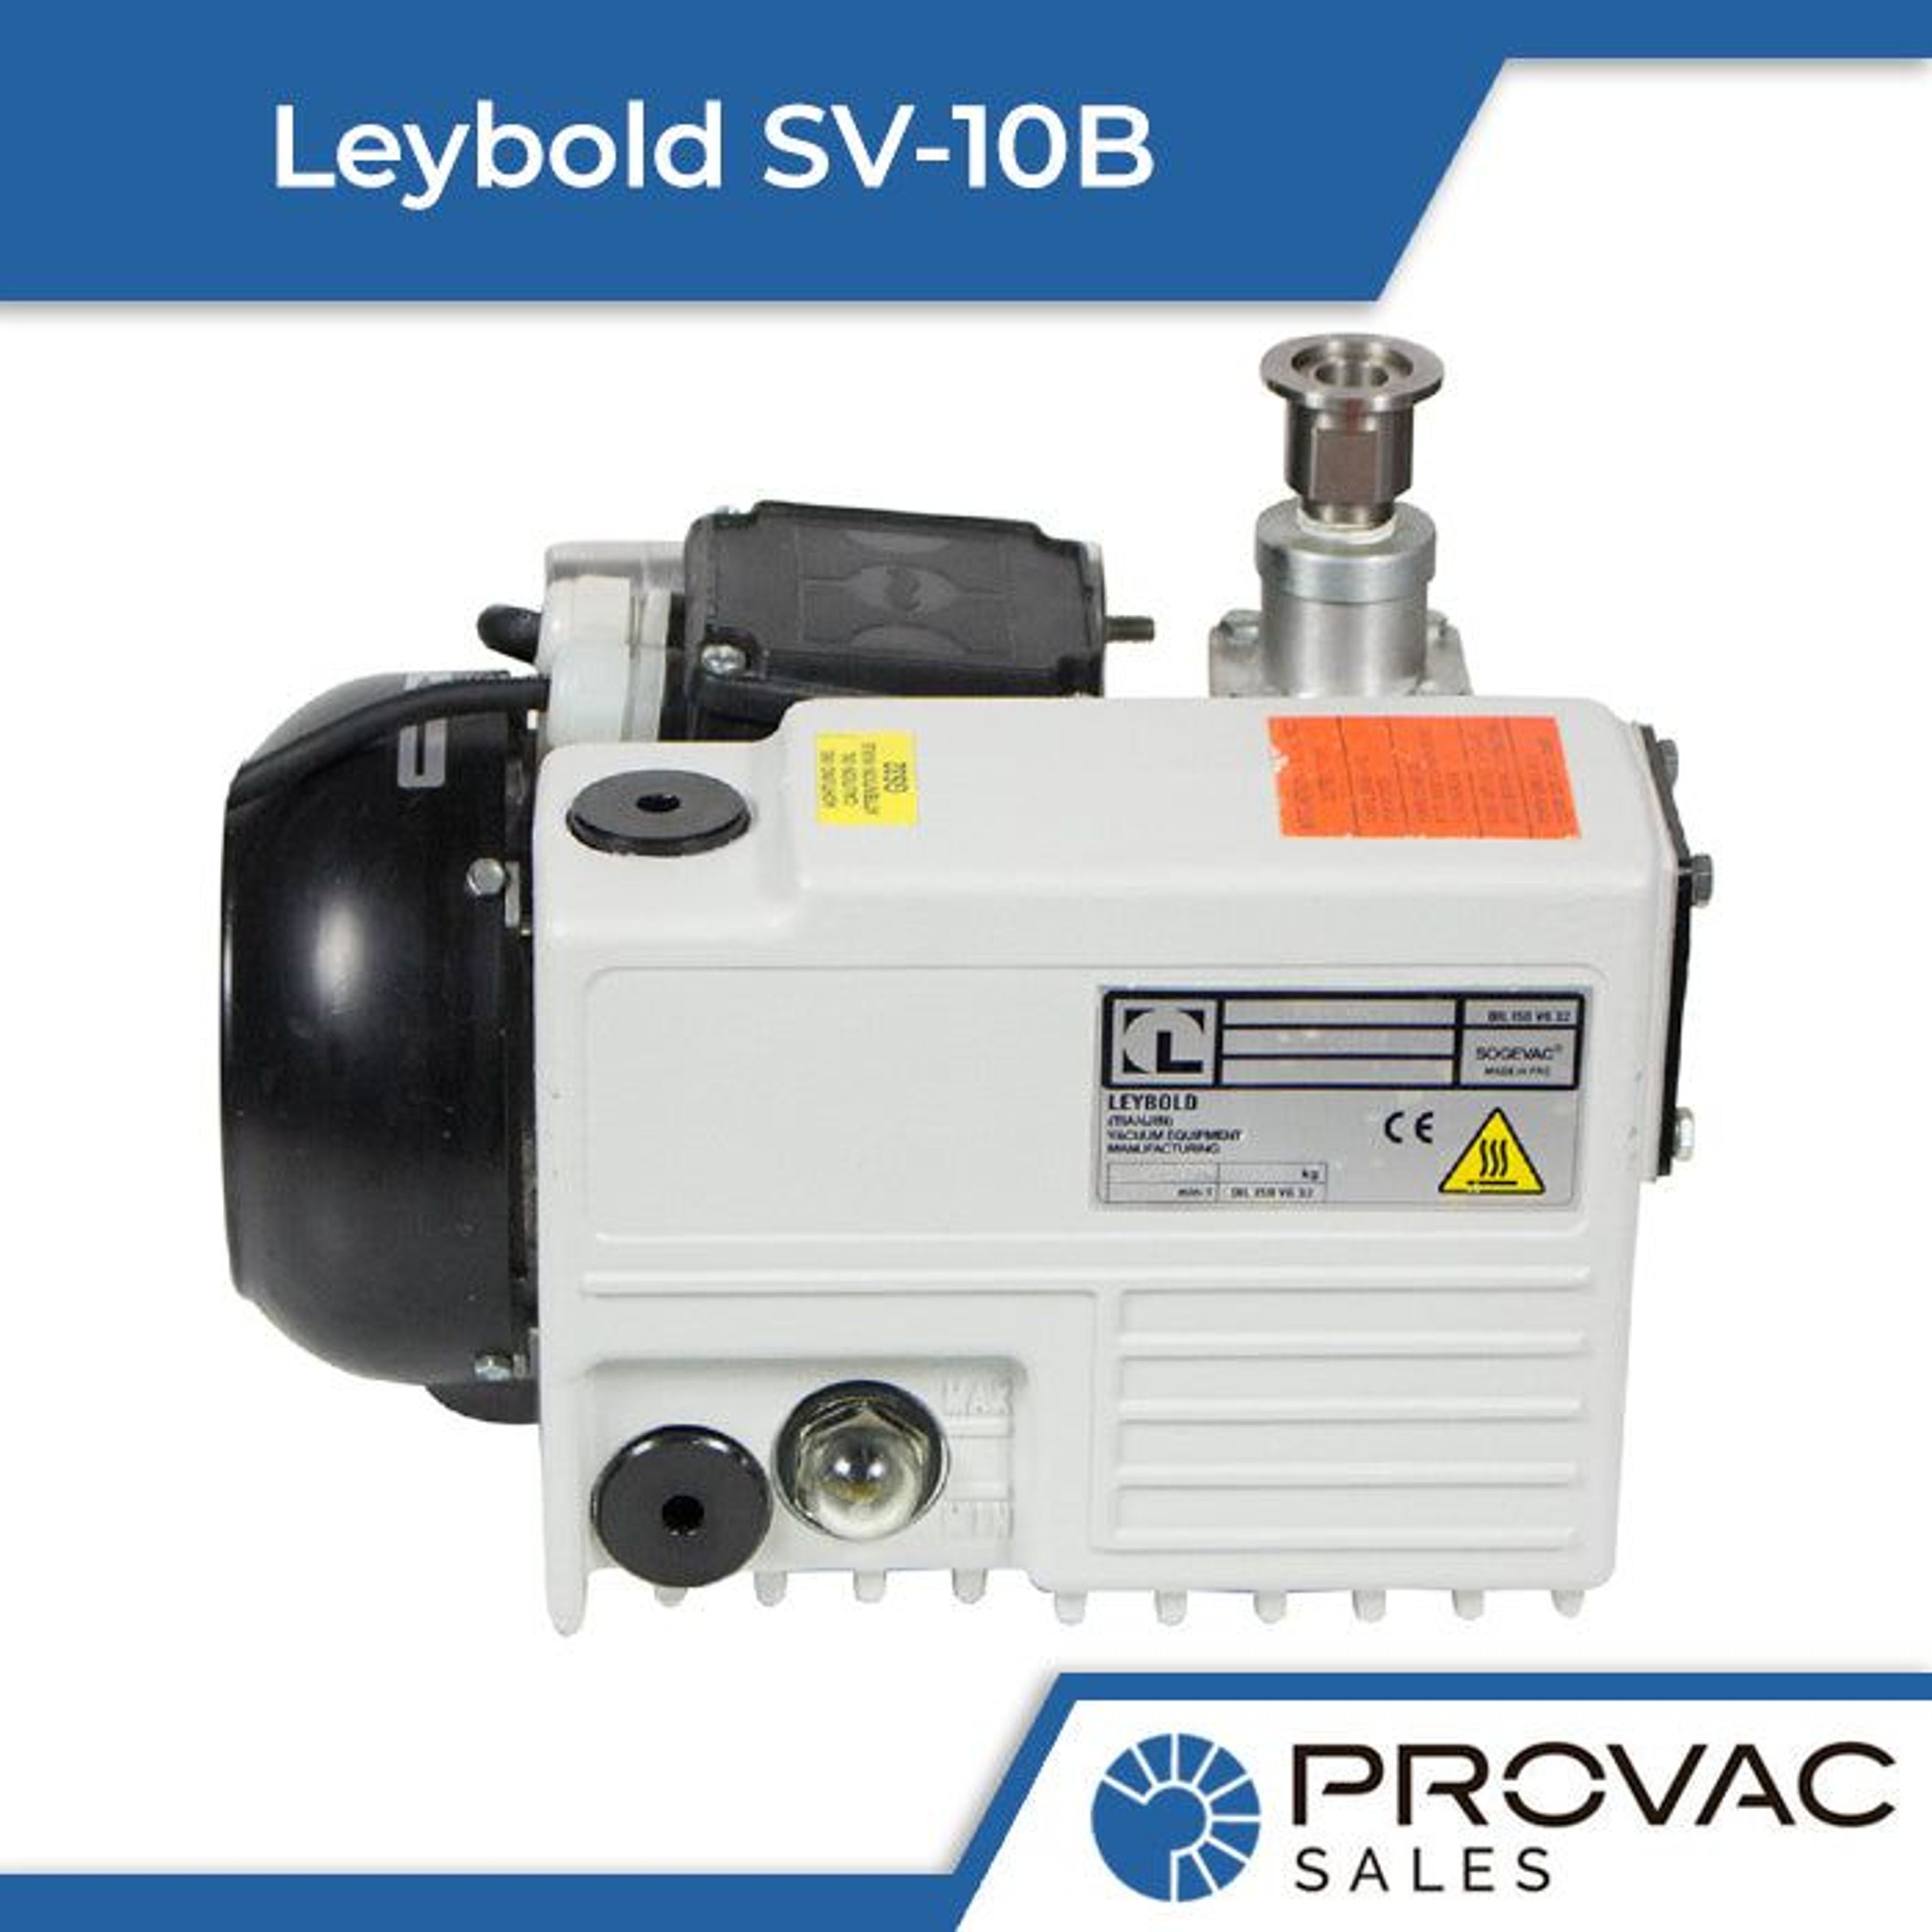 Leybold SV-10B Vane Pump: Rebuilt, In Stock, Ready To Ship Background